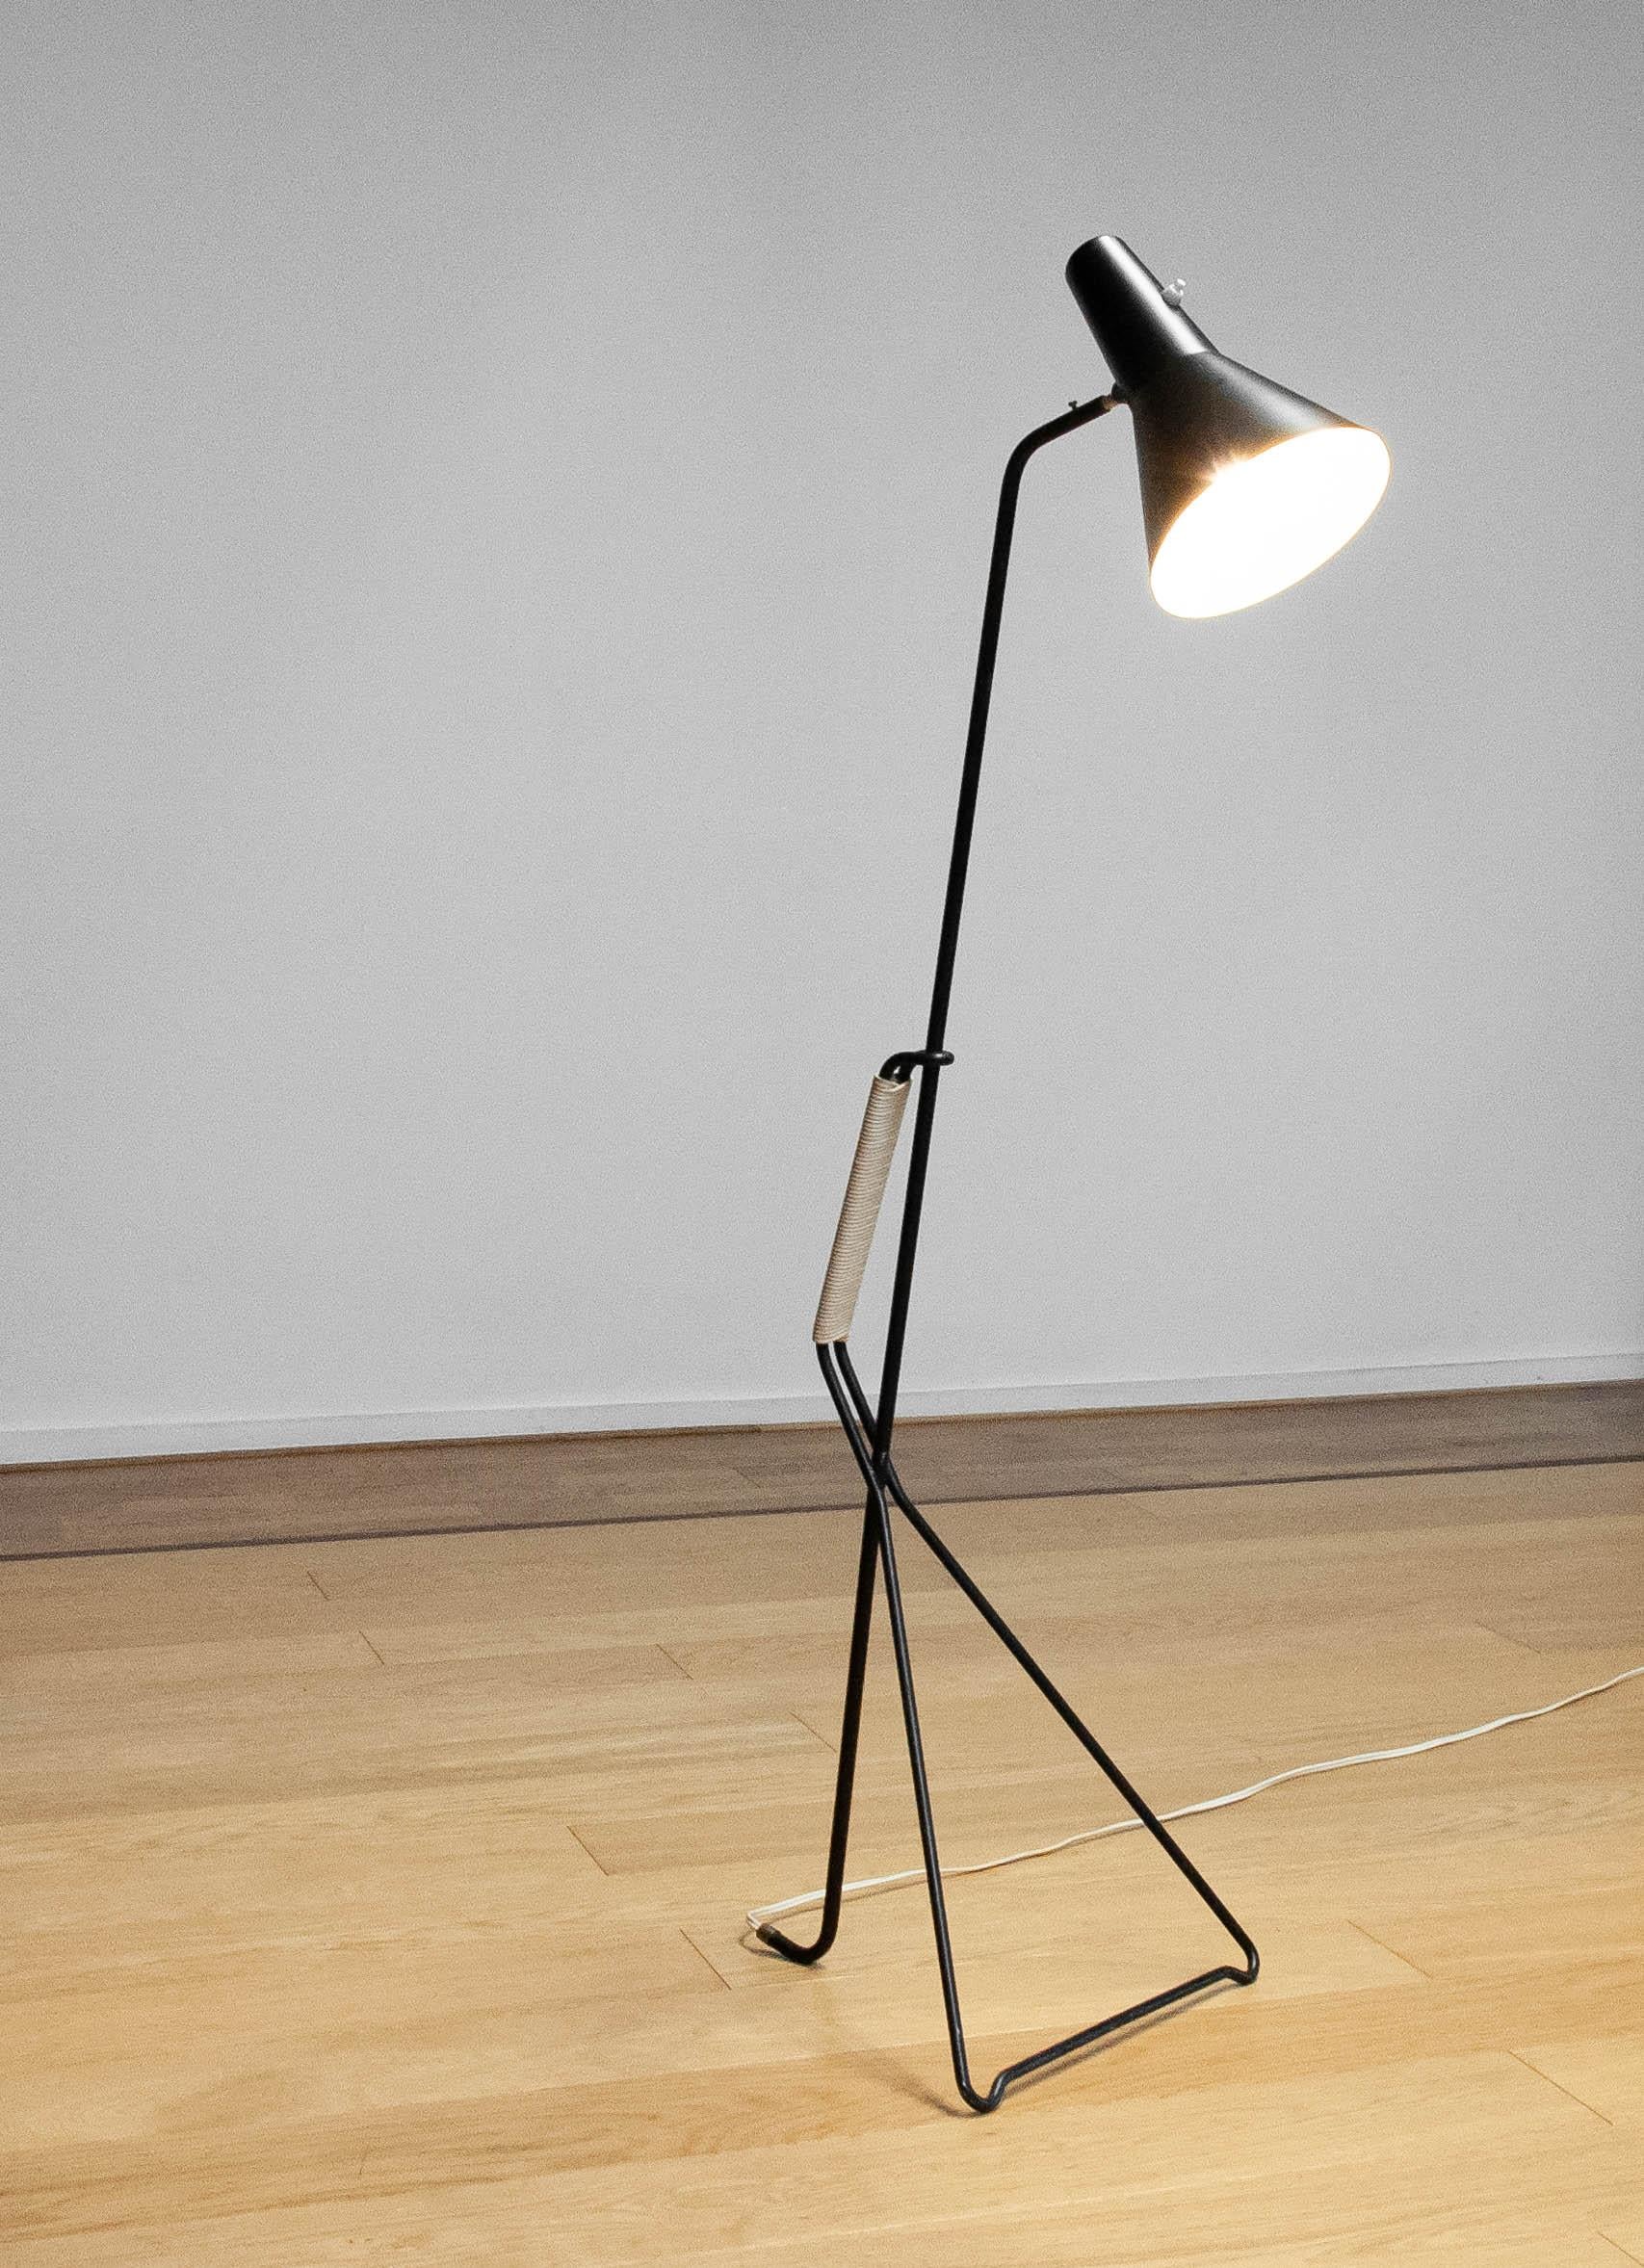 Metal 1950s Black Swedish Grasshopper Floor Lamp By Svend Aage Holm Sorensen For Asea. For Sale